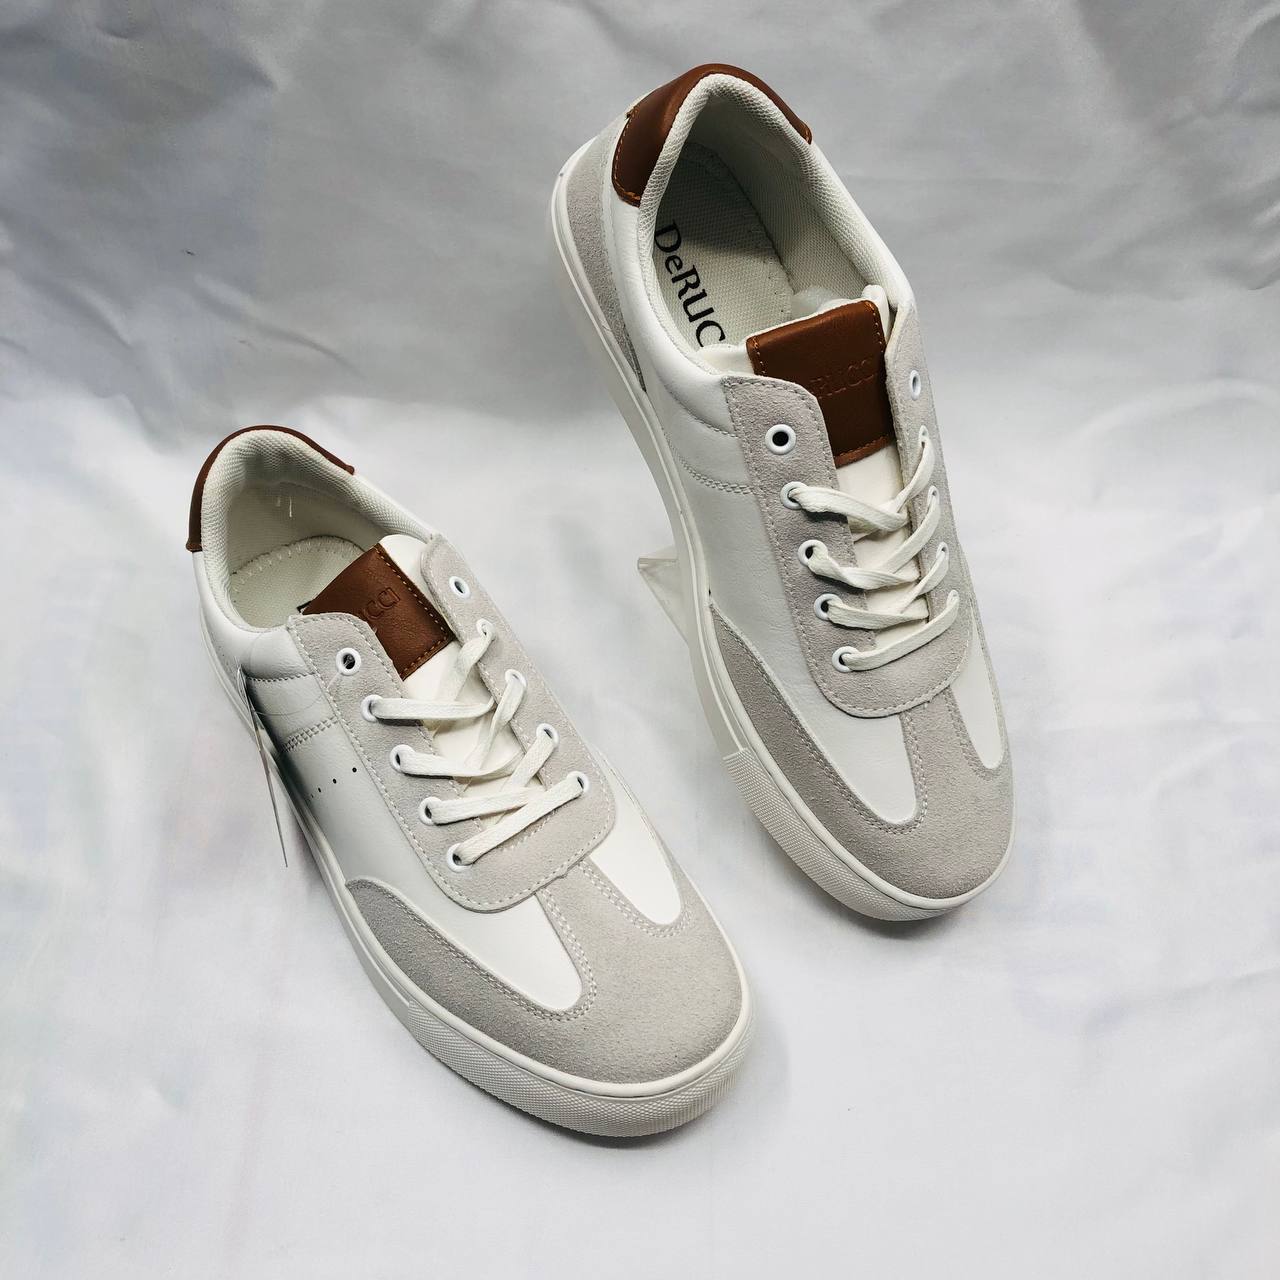 Men’s Casual Shoes D070- White/Brown | ASQ.LK